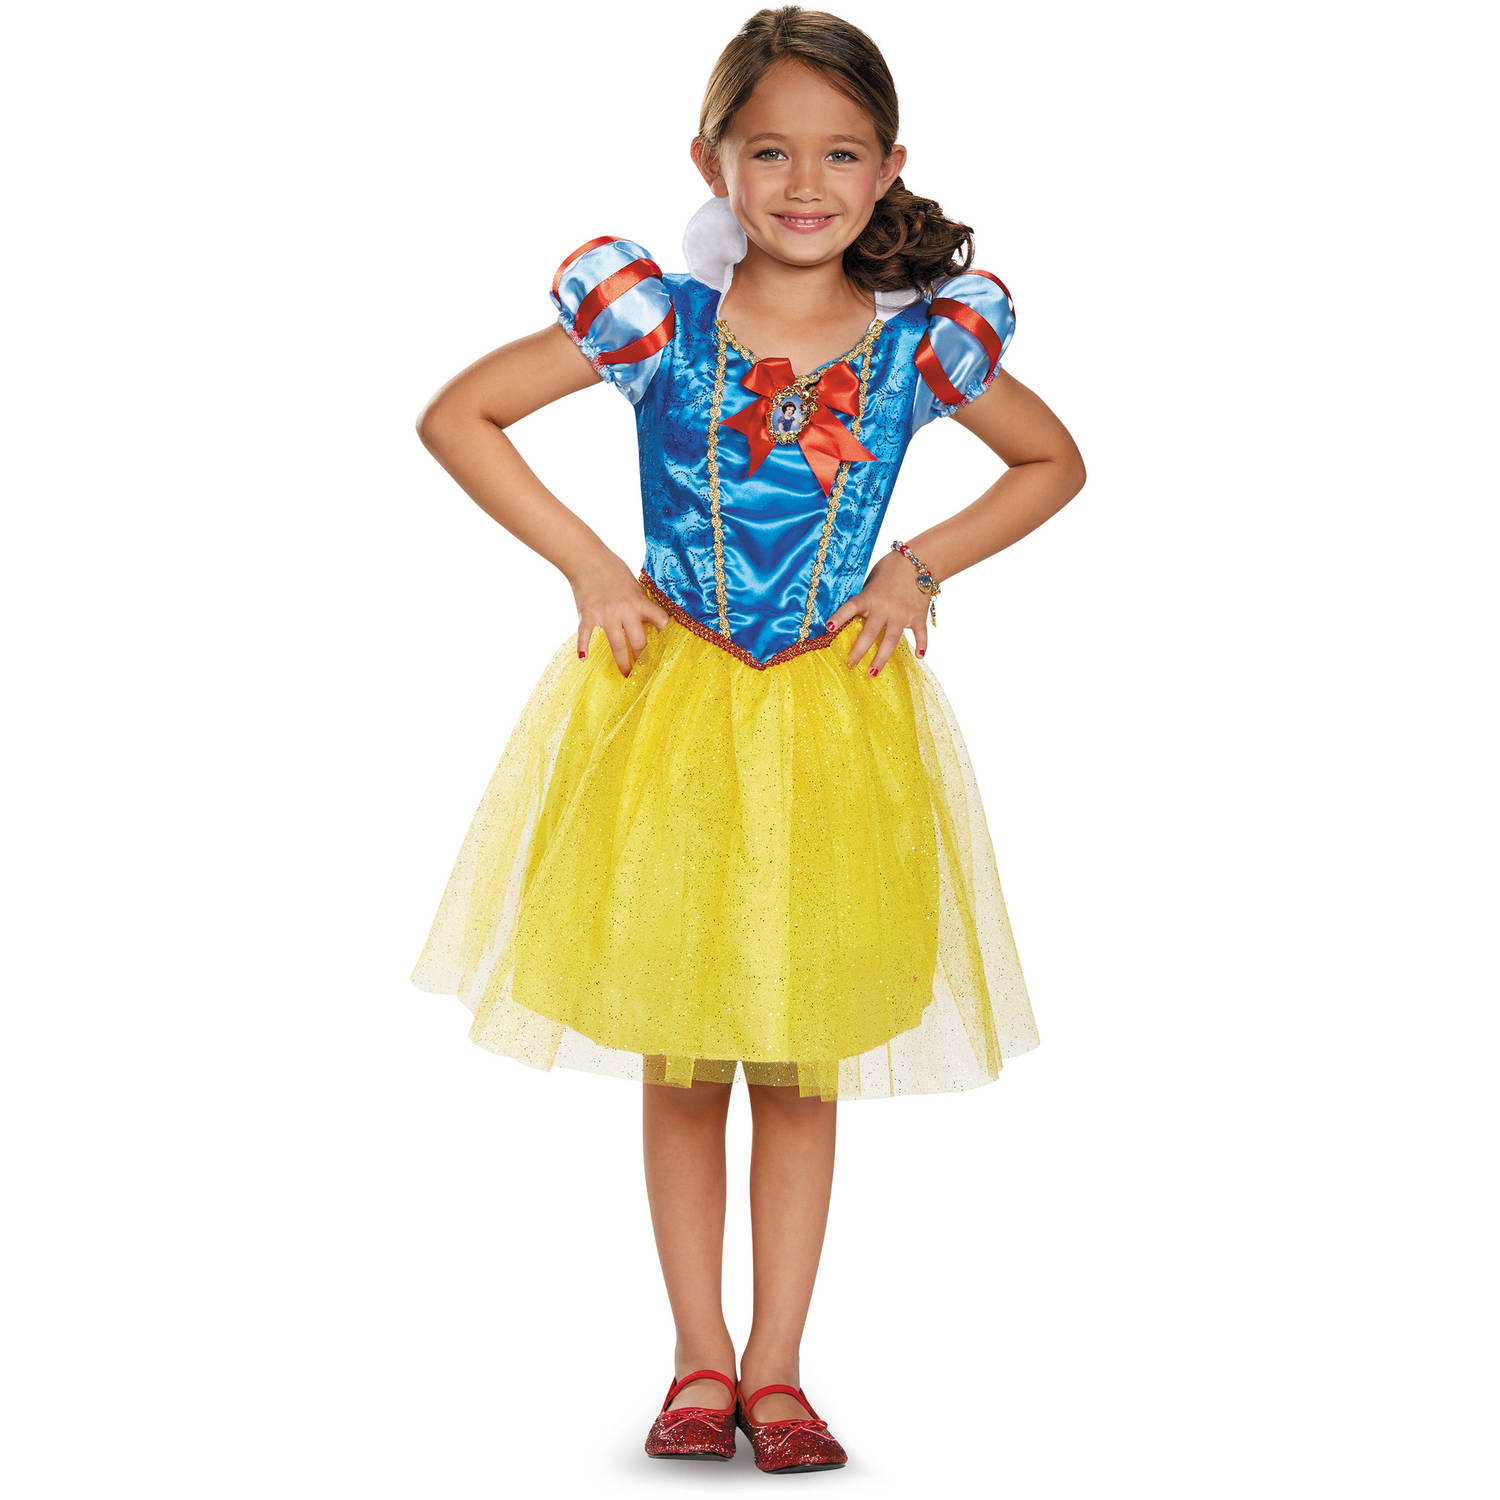 Disney Snow White Classic Child Halloween Costume - image 1 of 2